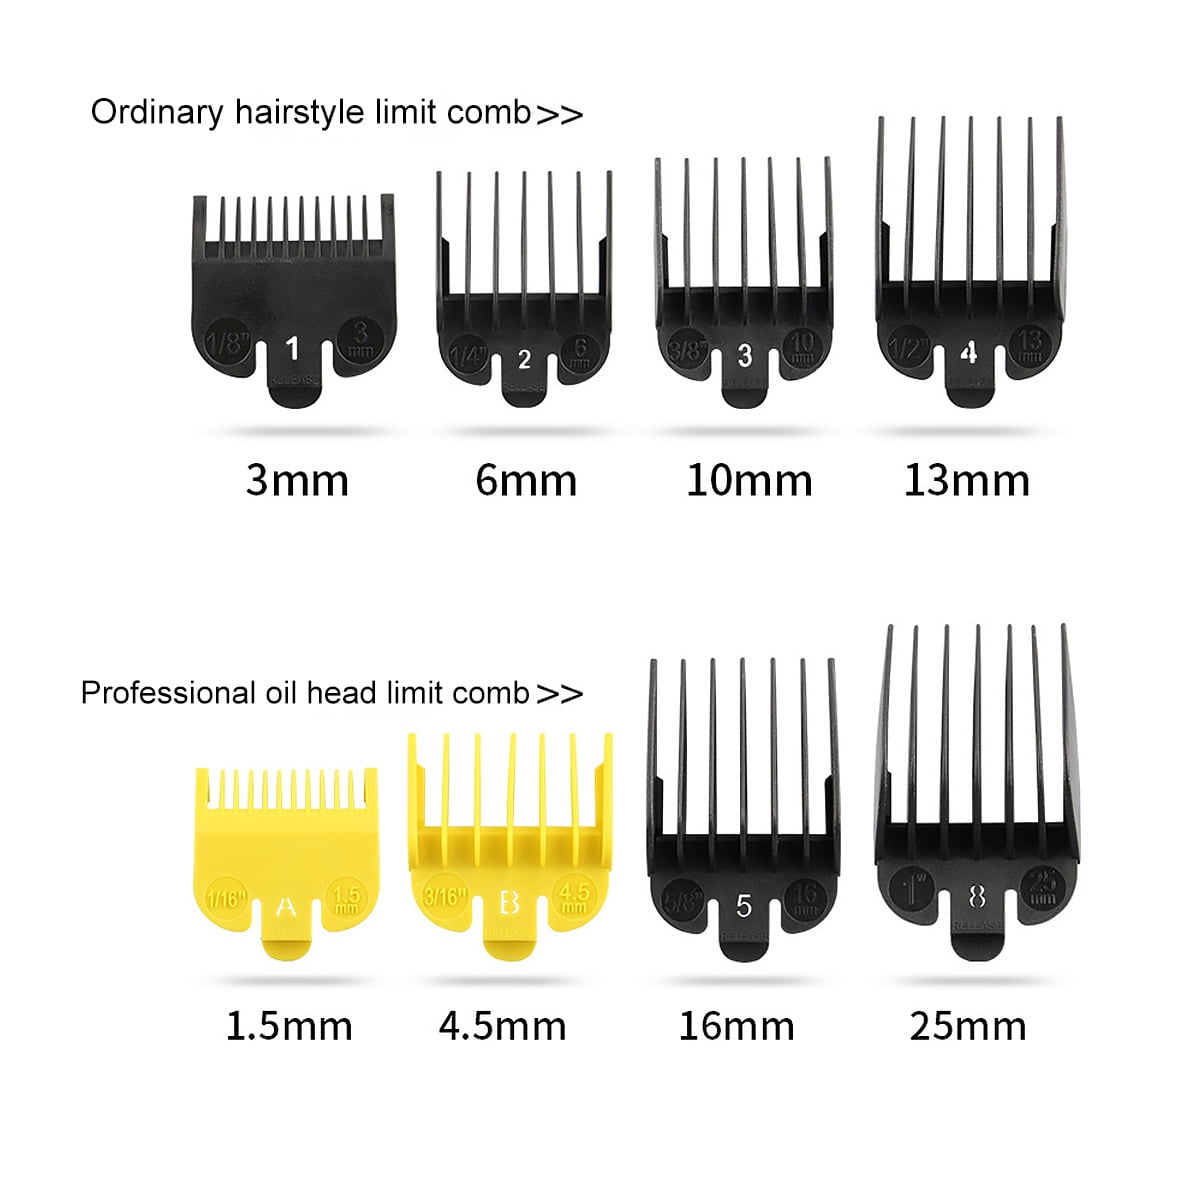 phaeton professional cordless hair trimmer